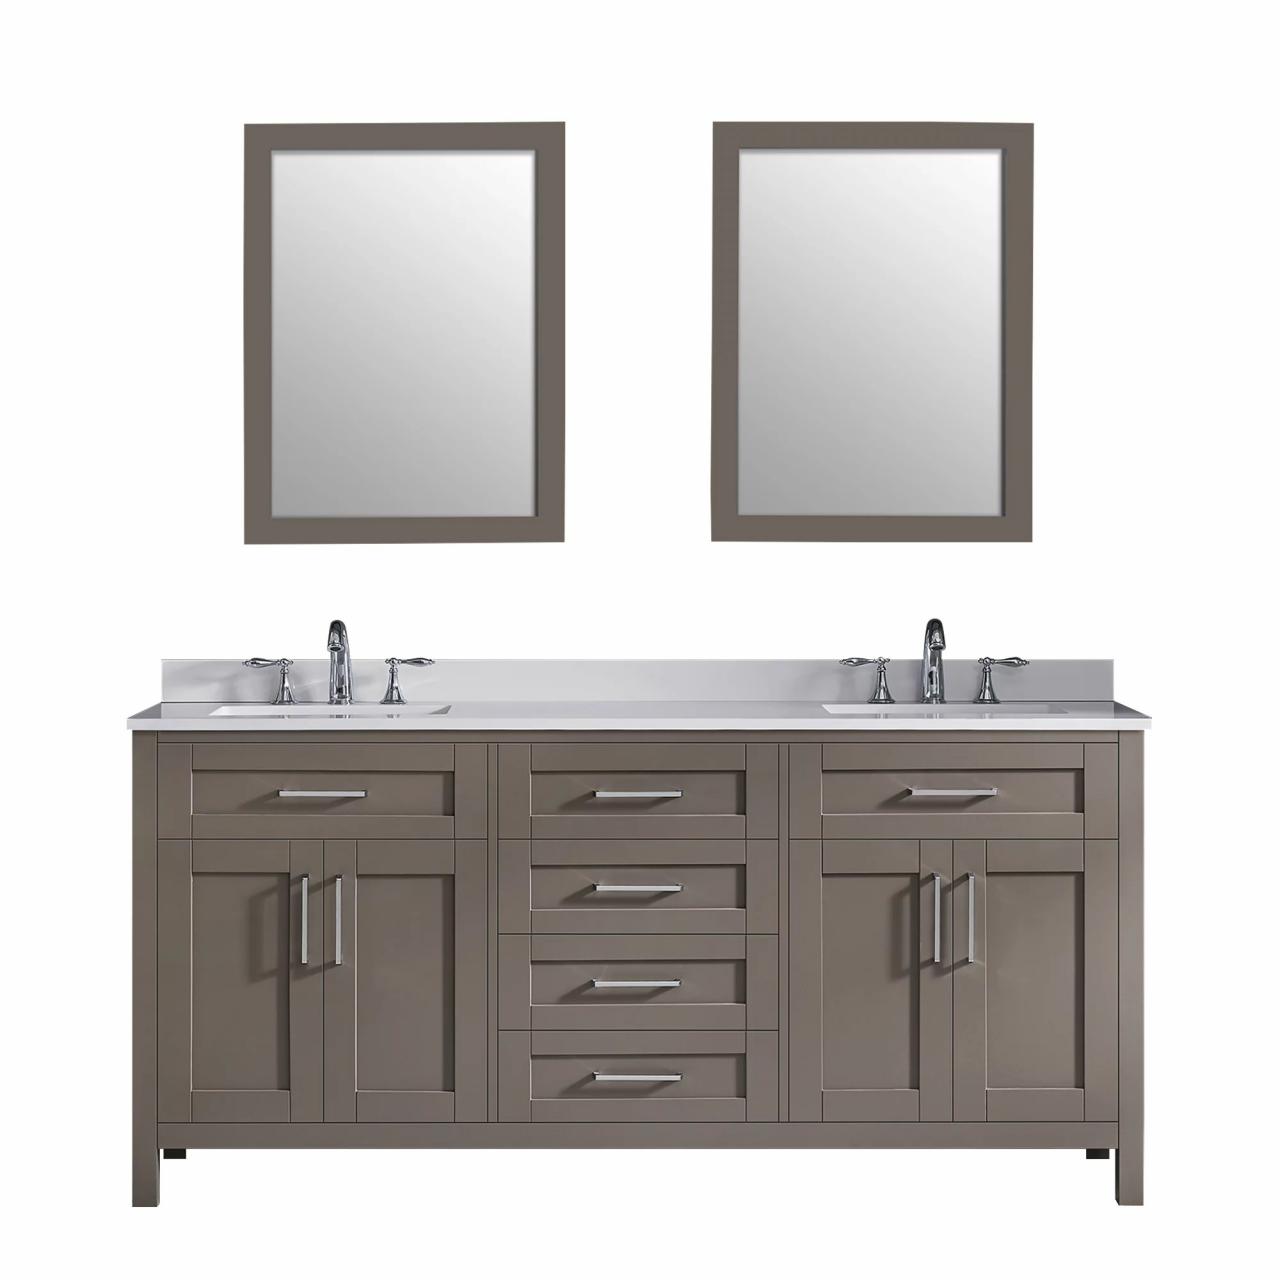 Ove Decors Tahoe 72 Saddle Brown Bathroom Double Sink Vanity with